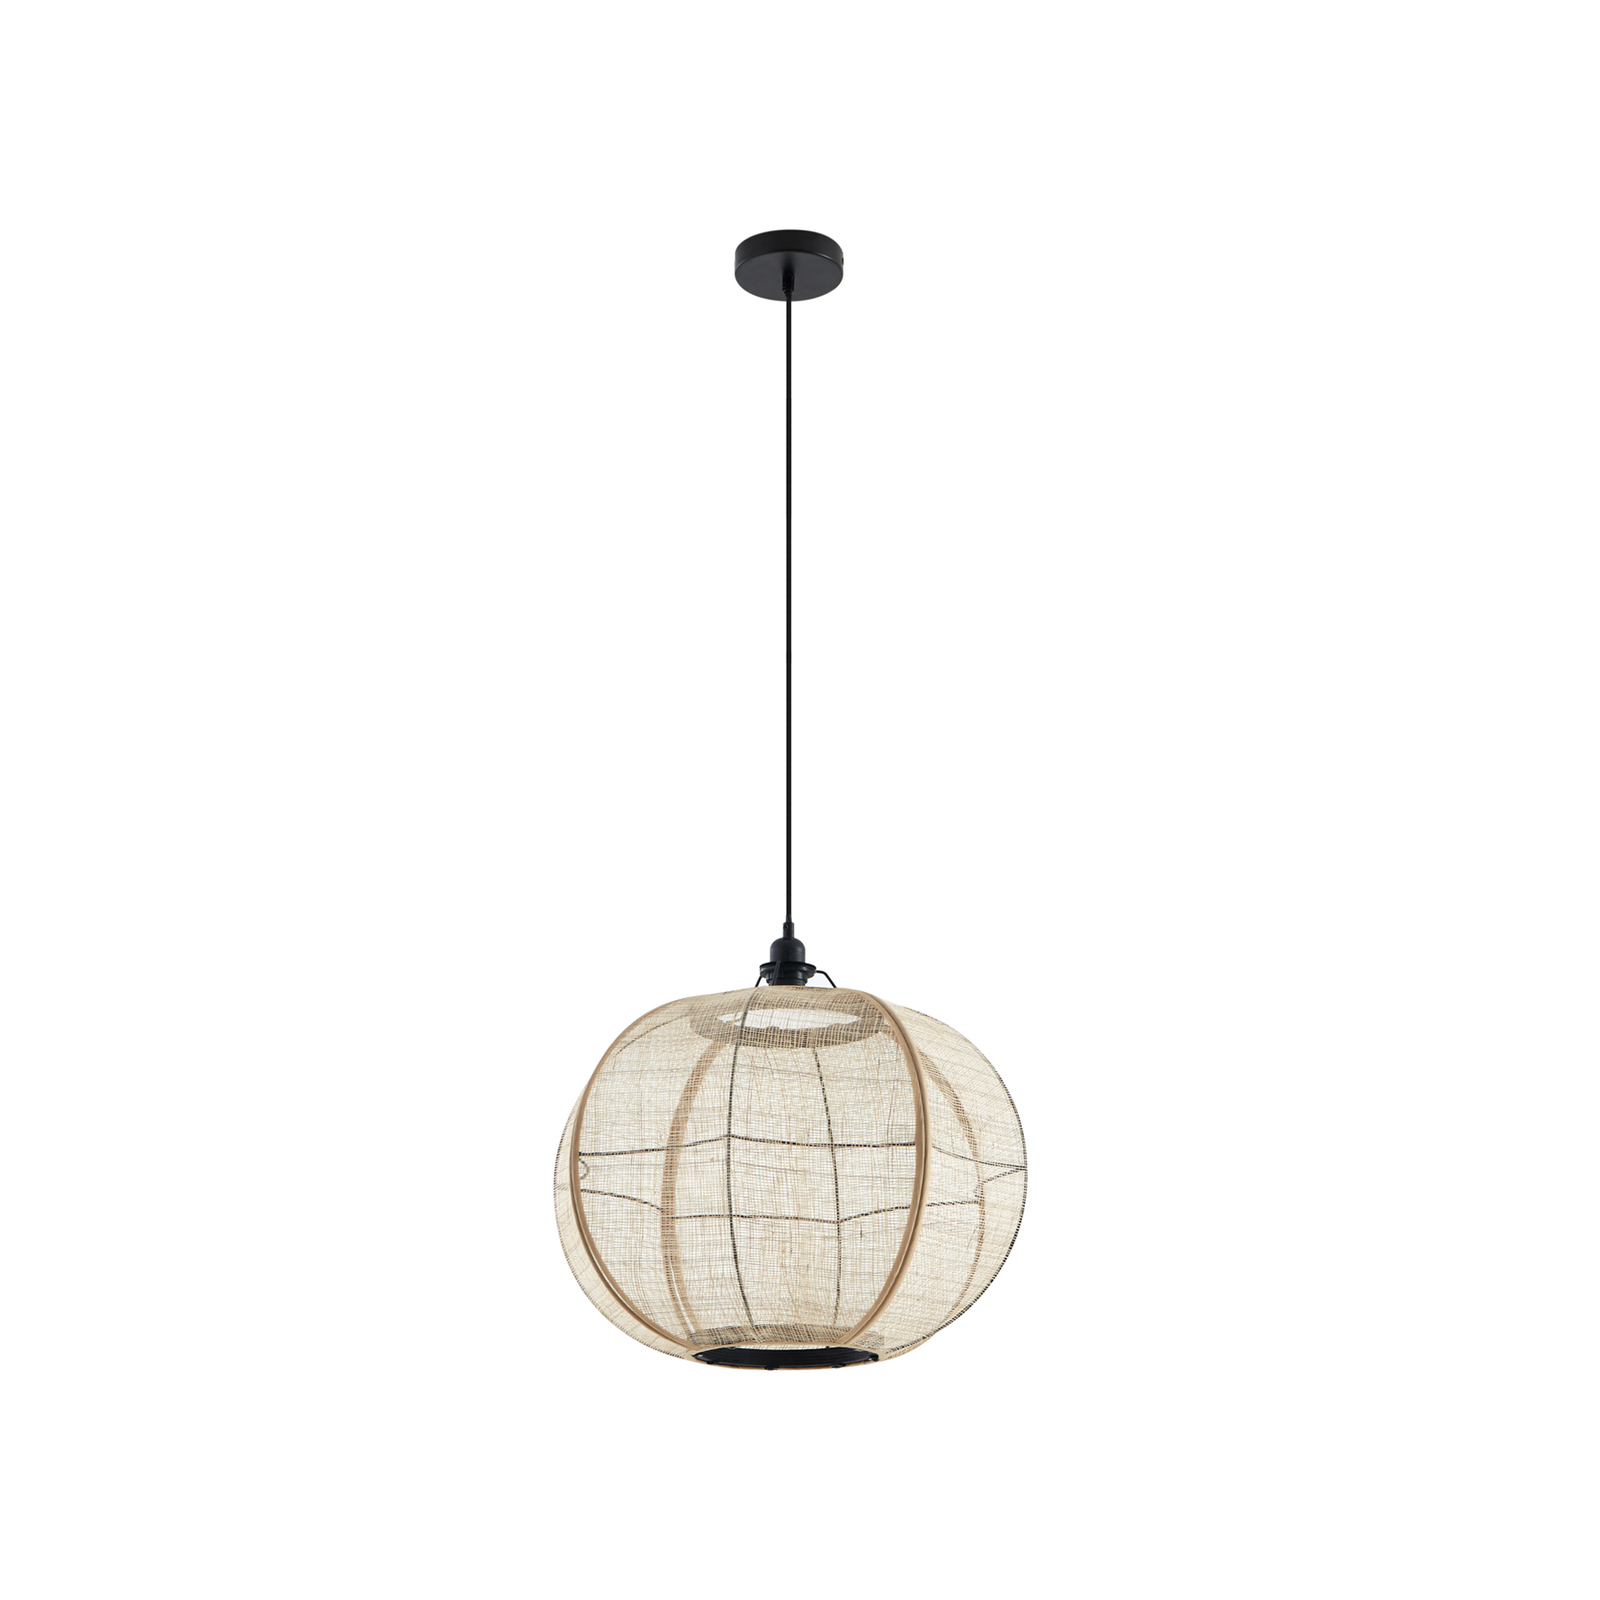 Lindby hanglamp Aurinil, houtkleurig, linnen, Ø 48cm, E27